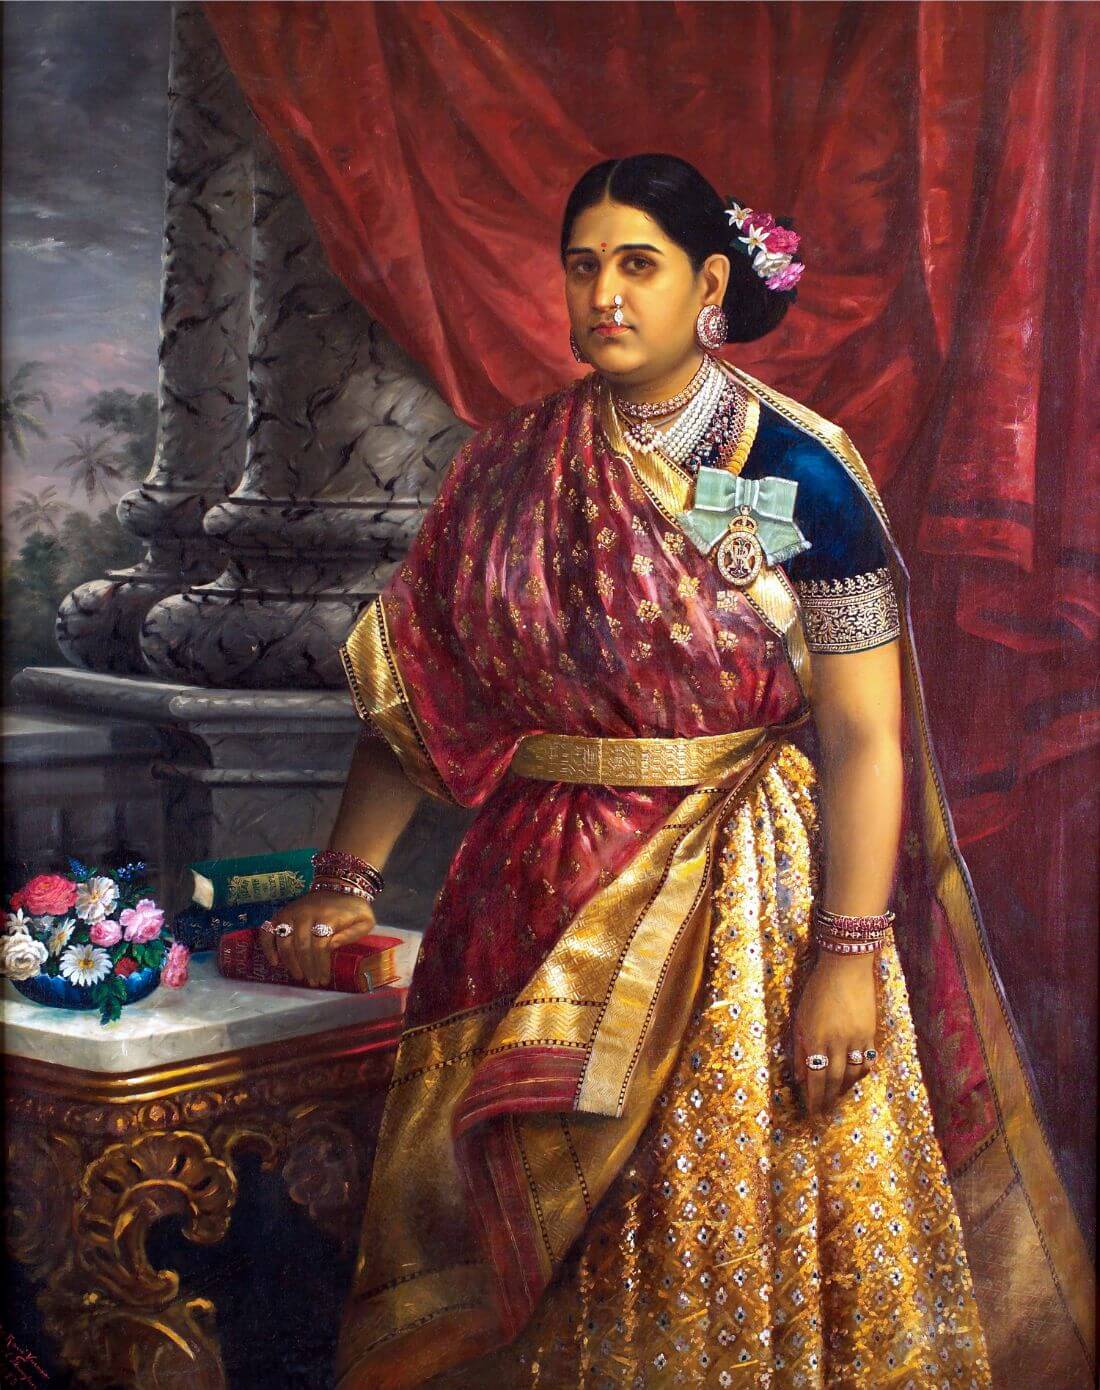 Raja Rani Old Rough Porn Video - Rani Bharani Thirunal Lakshmi Bayi Of Travancore - Raja Ravi Varma - Indian  King Queen Royal Painting - Large Art Prints by Royal Portraits | Buy  Posters, Frames, Canvas & Digital Art